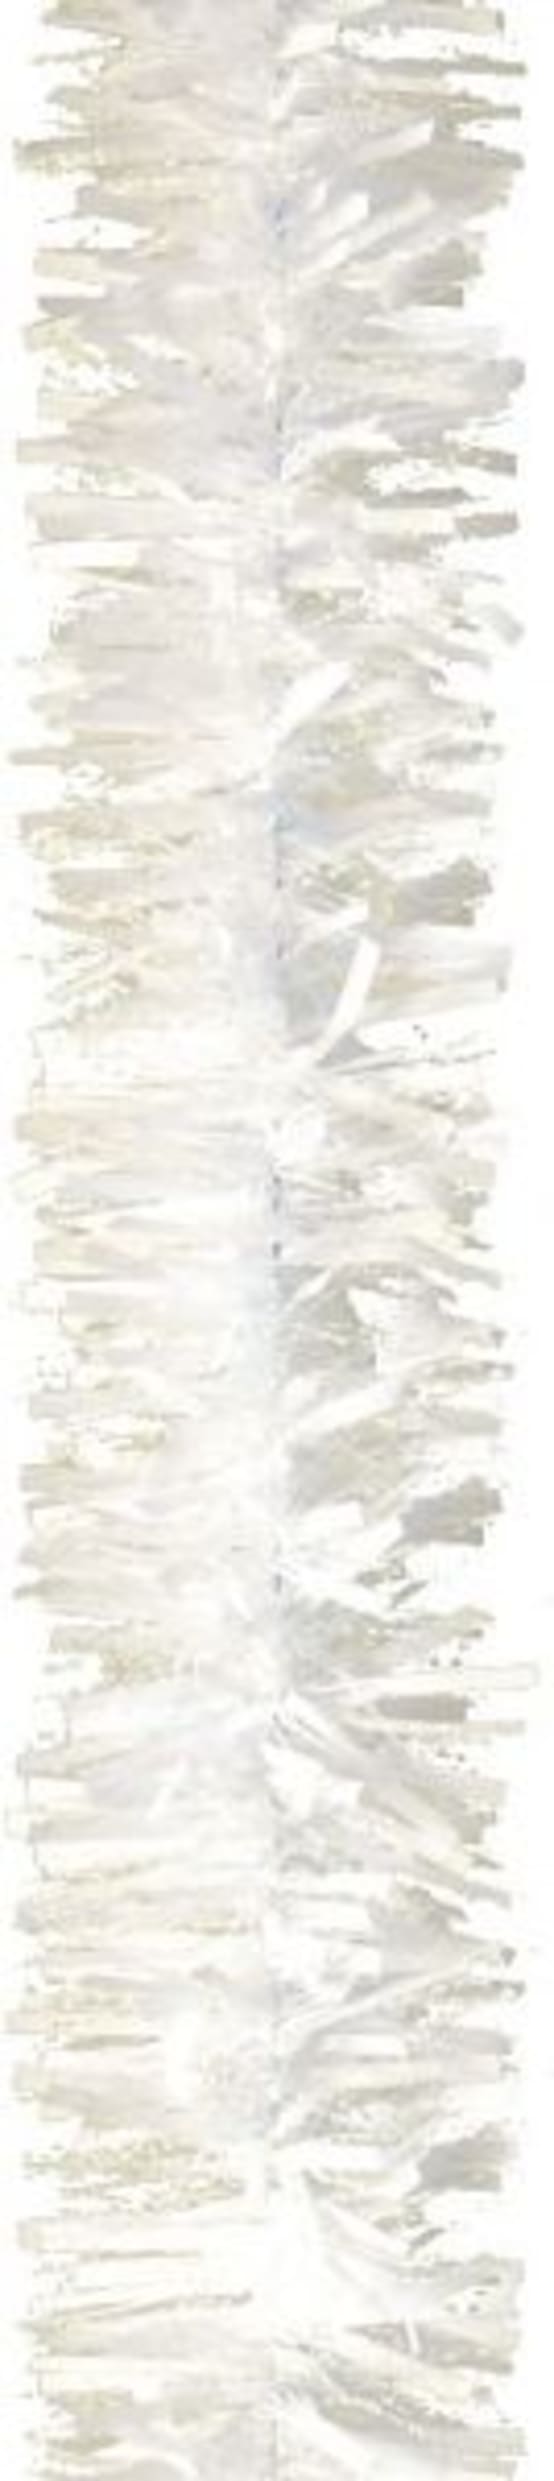 Guirlande scintillante blanche ornée de flocons L200 cm